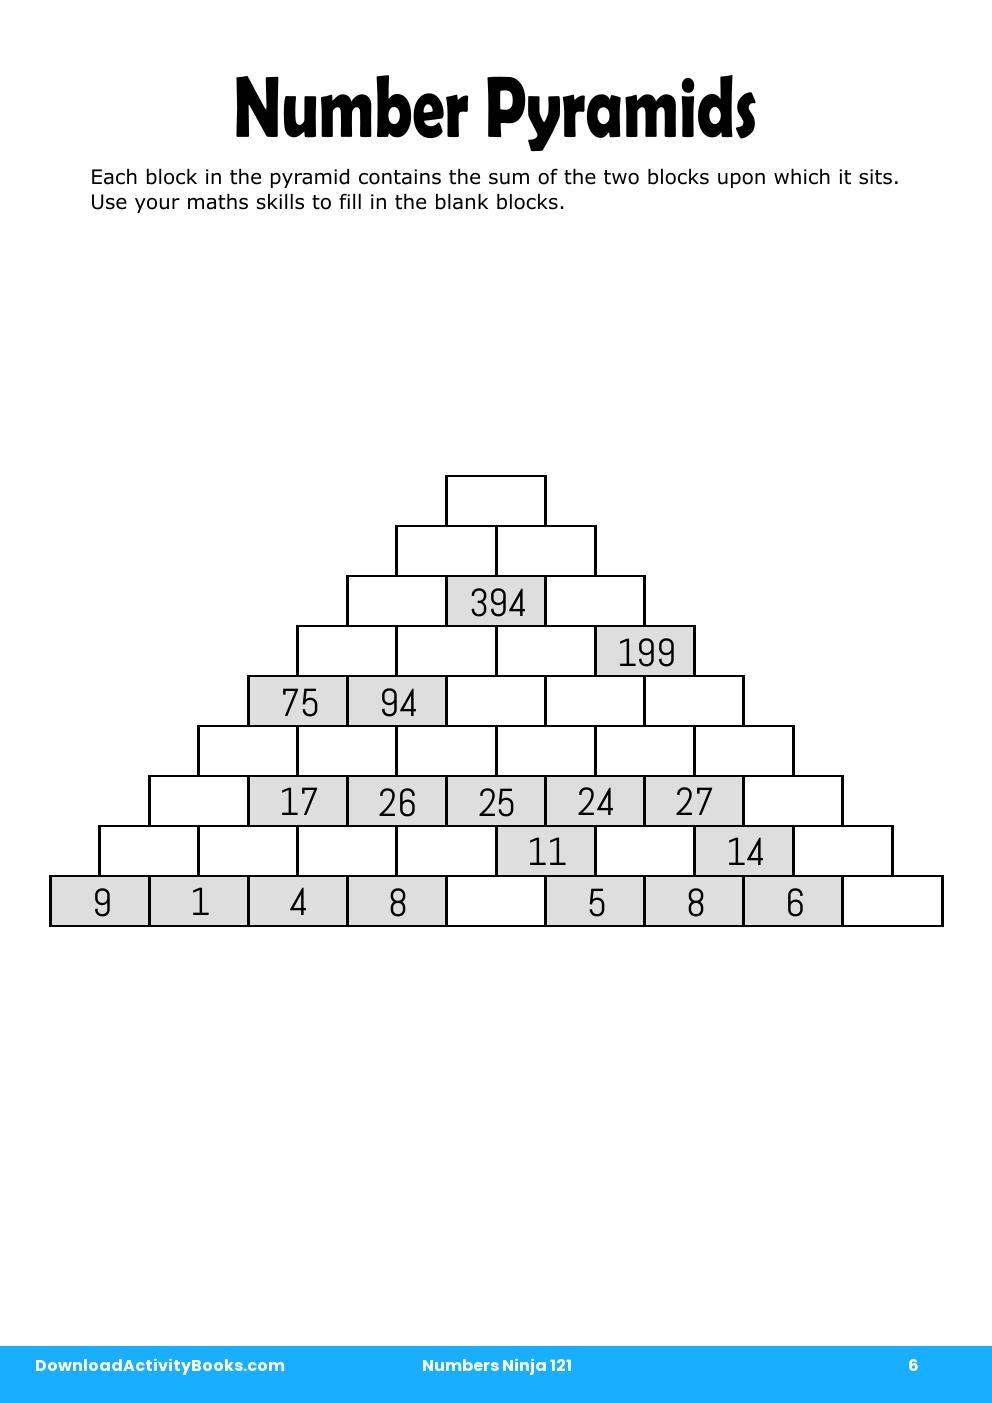 Number Pyramids in Numbers Ninja 121